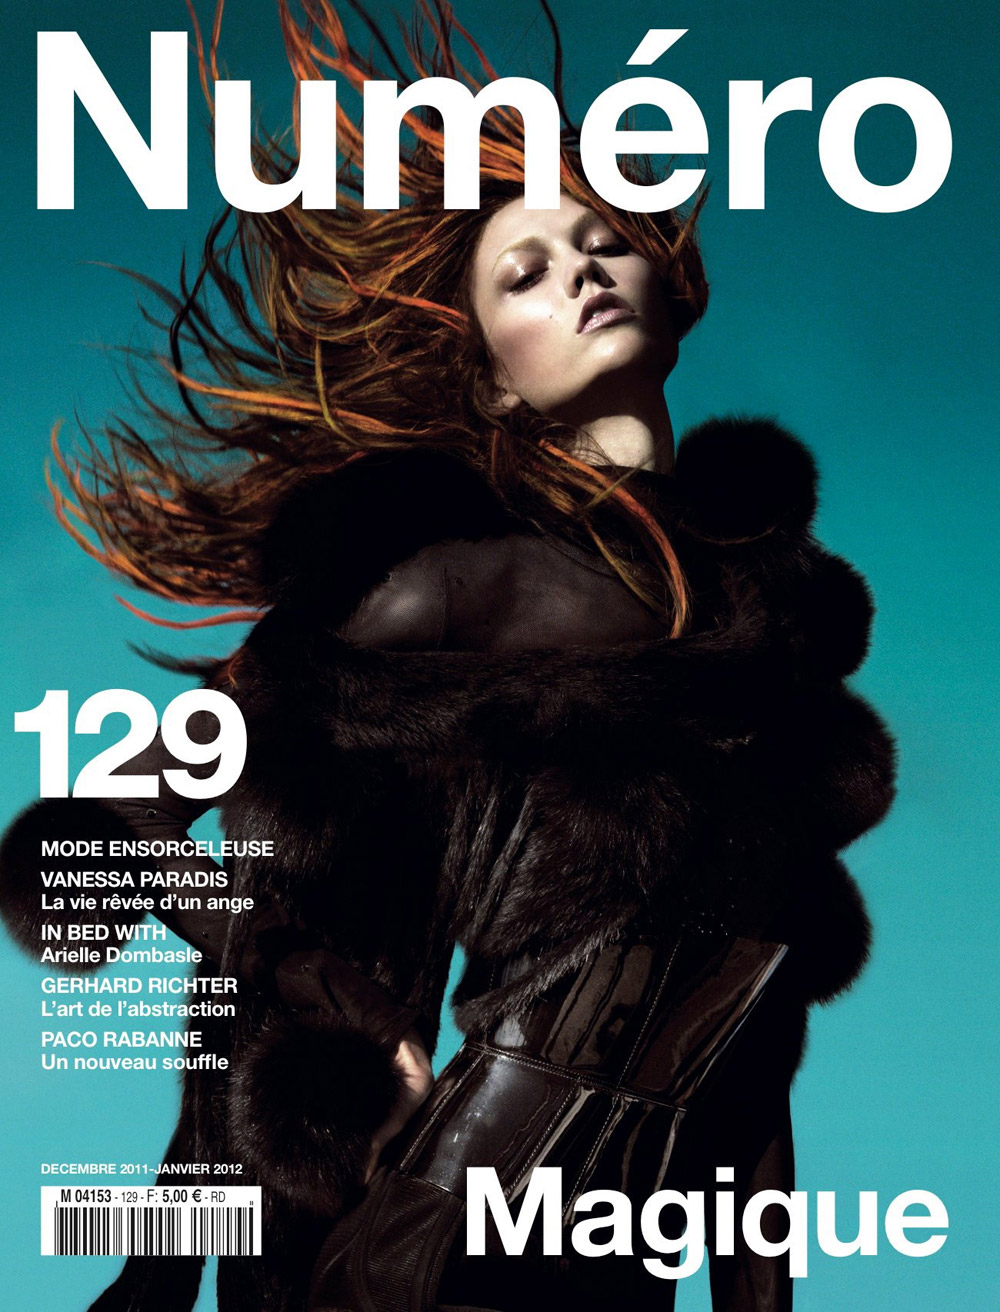 Under the Covers 2: Fashion Killa - Página 33 Karlie-Kloss-for-Numero-01